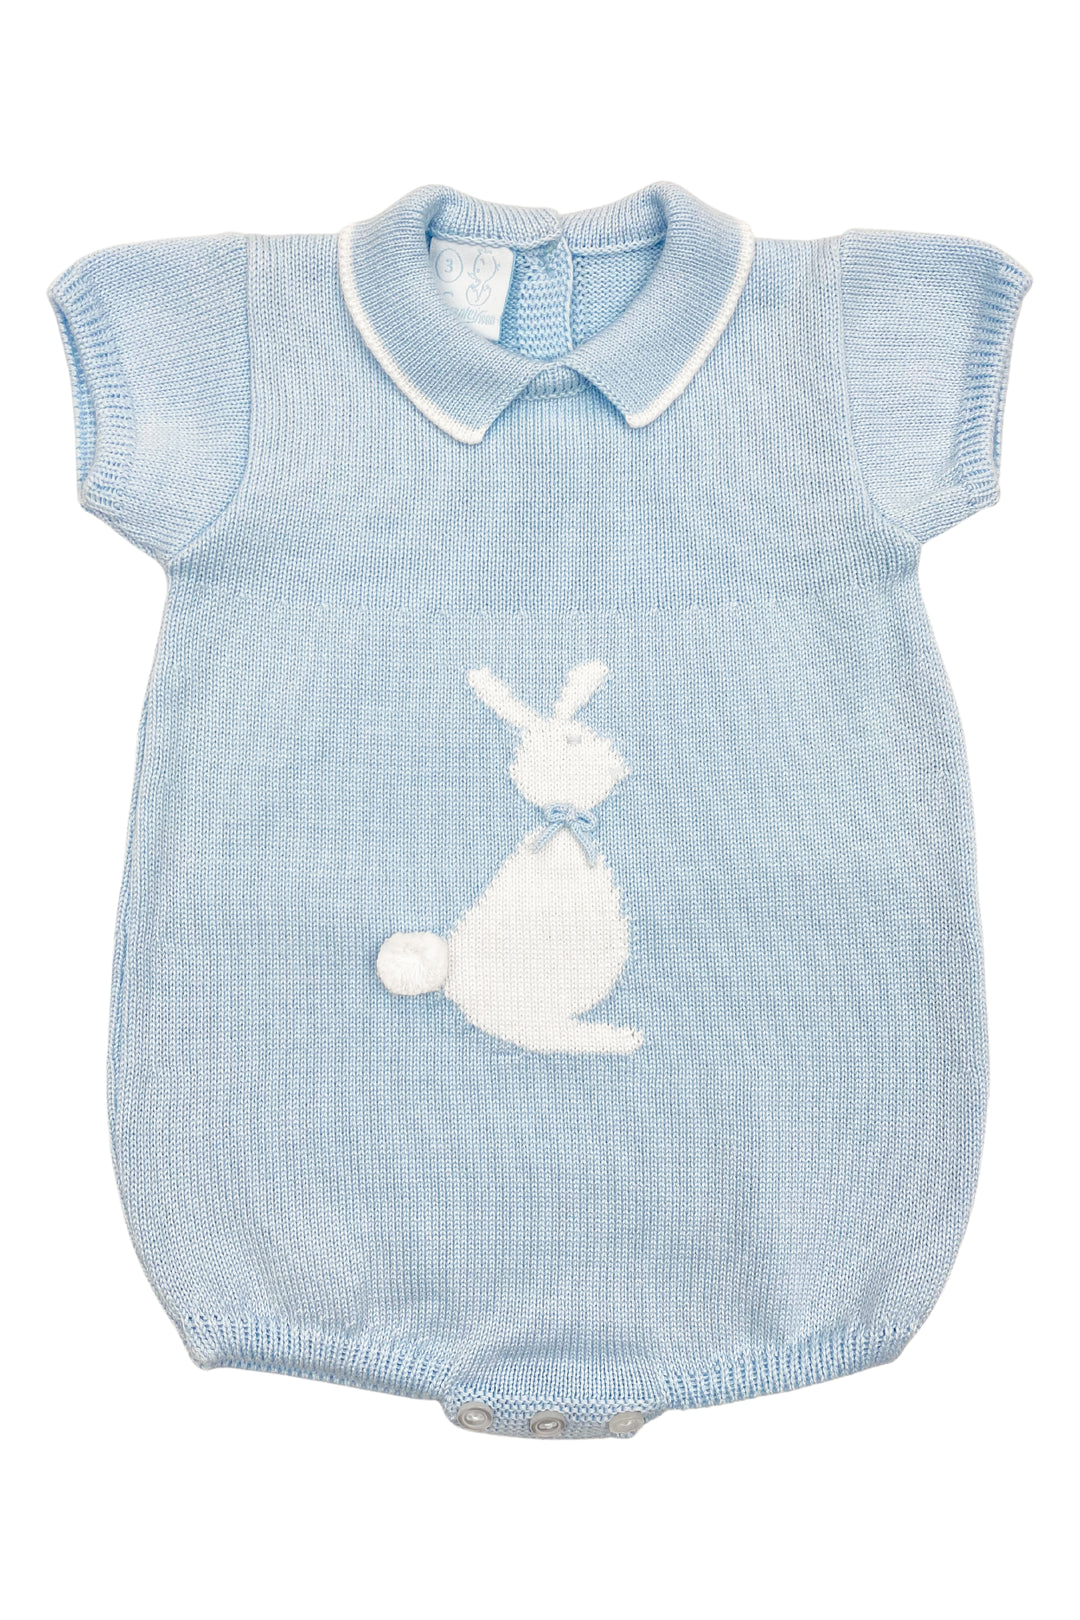 Granlei "Santi" Blue Knit Bunny Romper | Millie and John